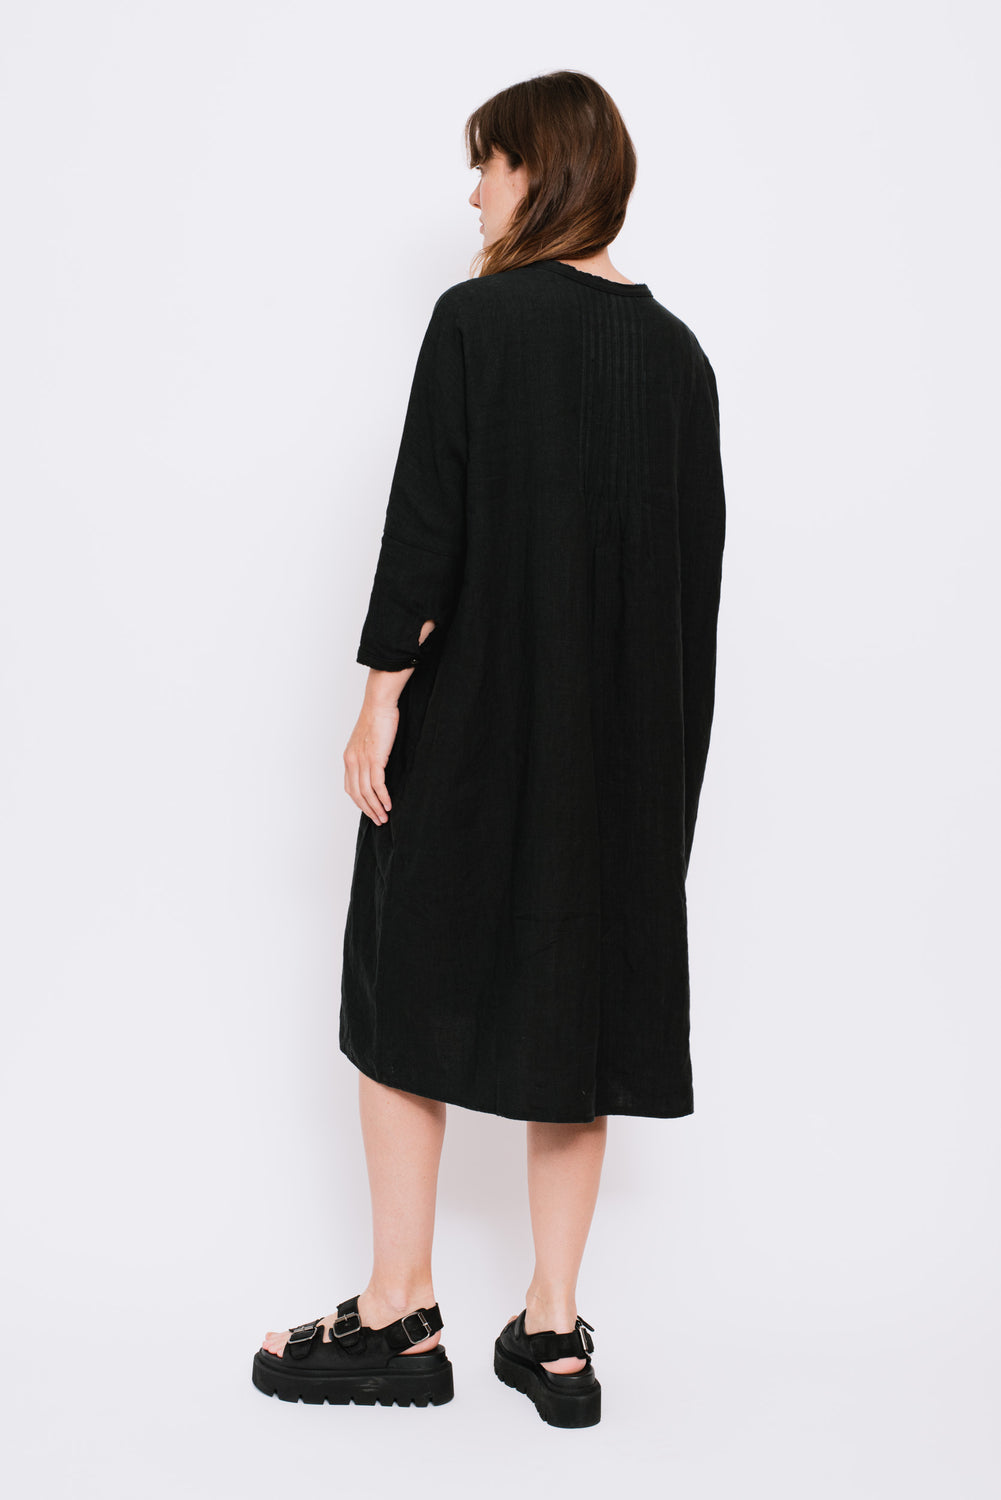 French Linen Pin Tucks O'KEEFE Dress Black – Moth